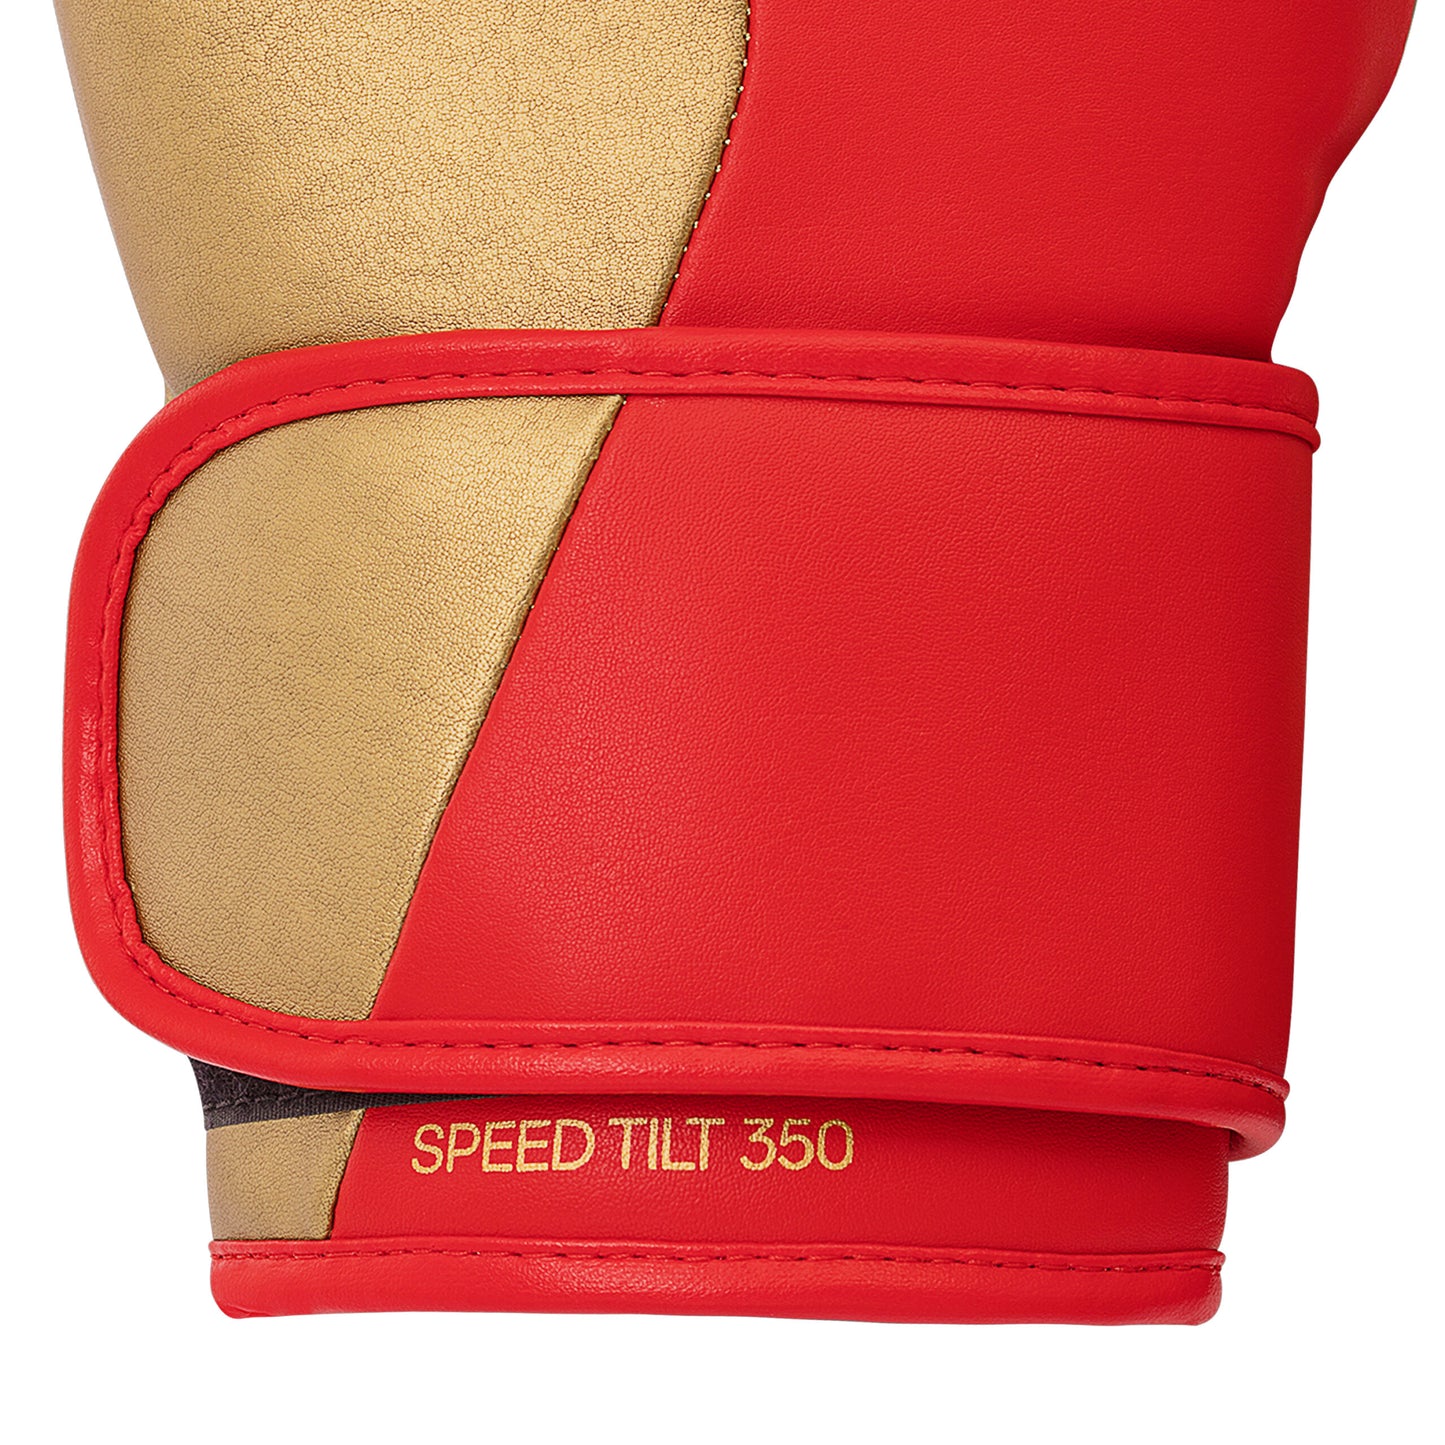 Adispd350tg Adidas Tilt 350 Pro Training Boxing Gloves Velcro Strap Red Gold 09